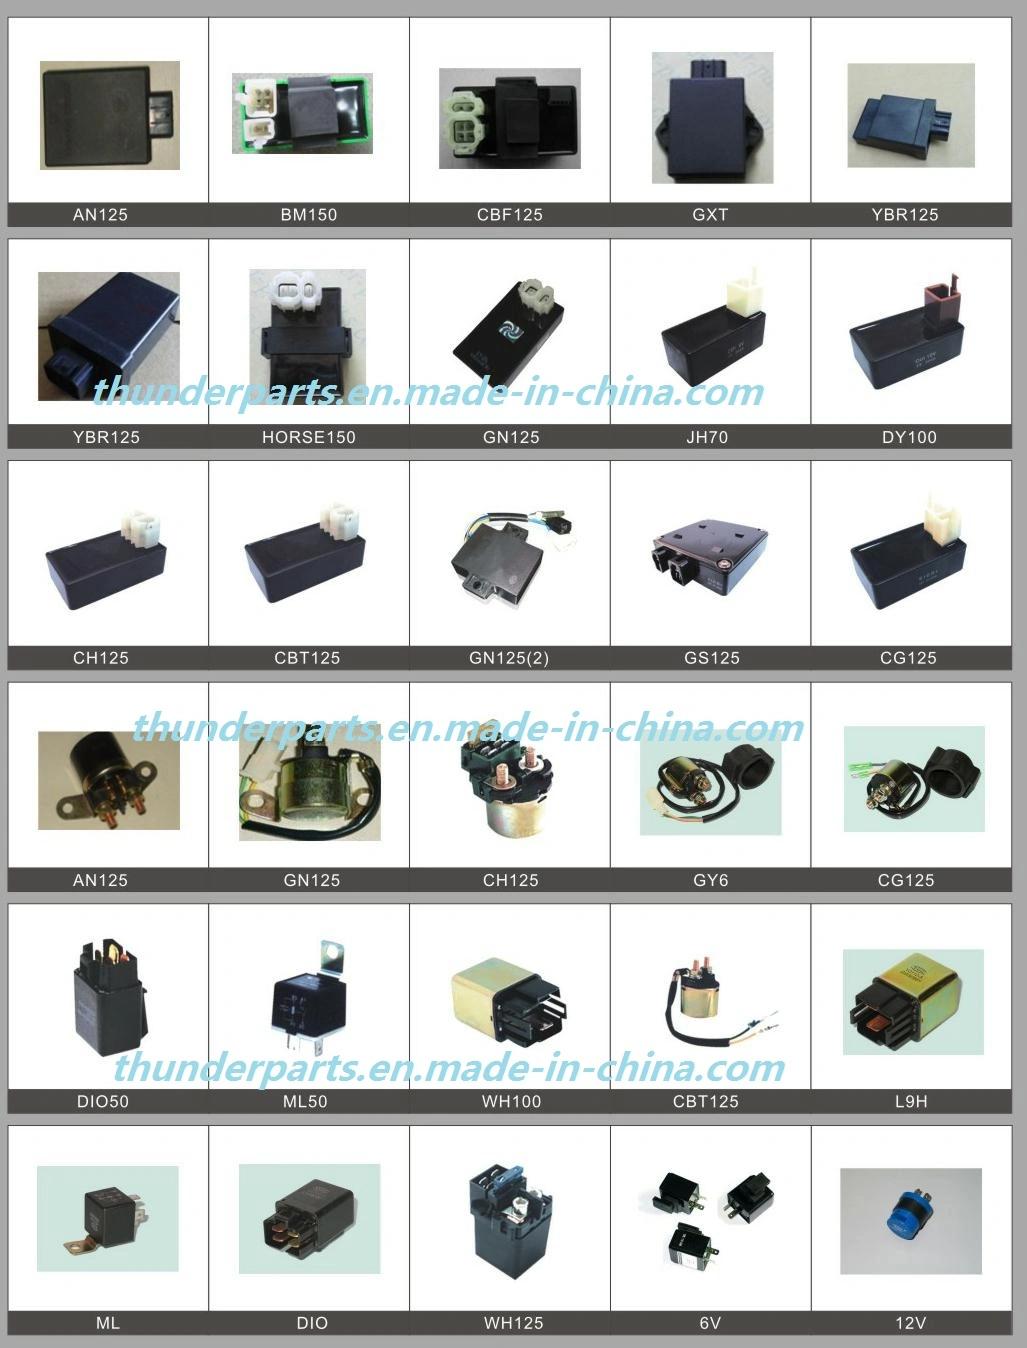 Motorcycle Cdi Unit Electrical Parts for YAMAHA/Suzuki/Honda/Bajaj Motorcycles